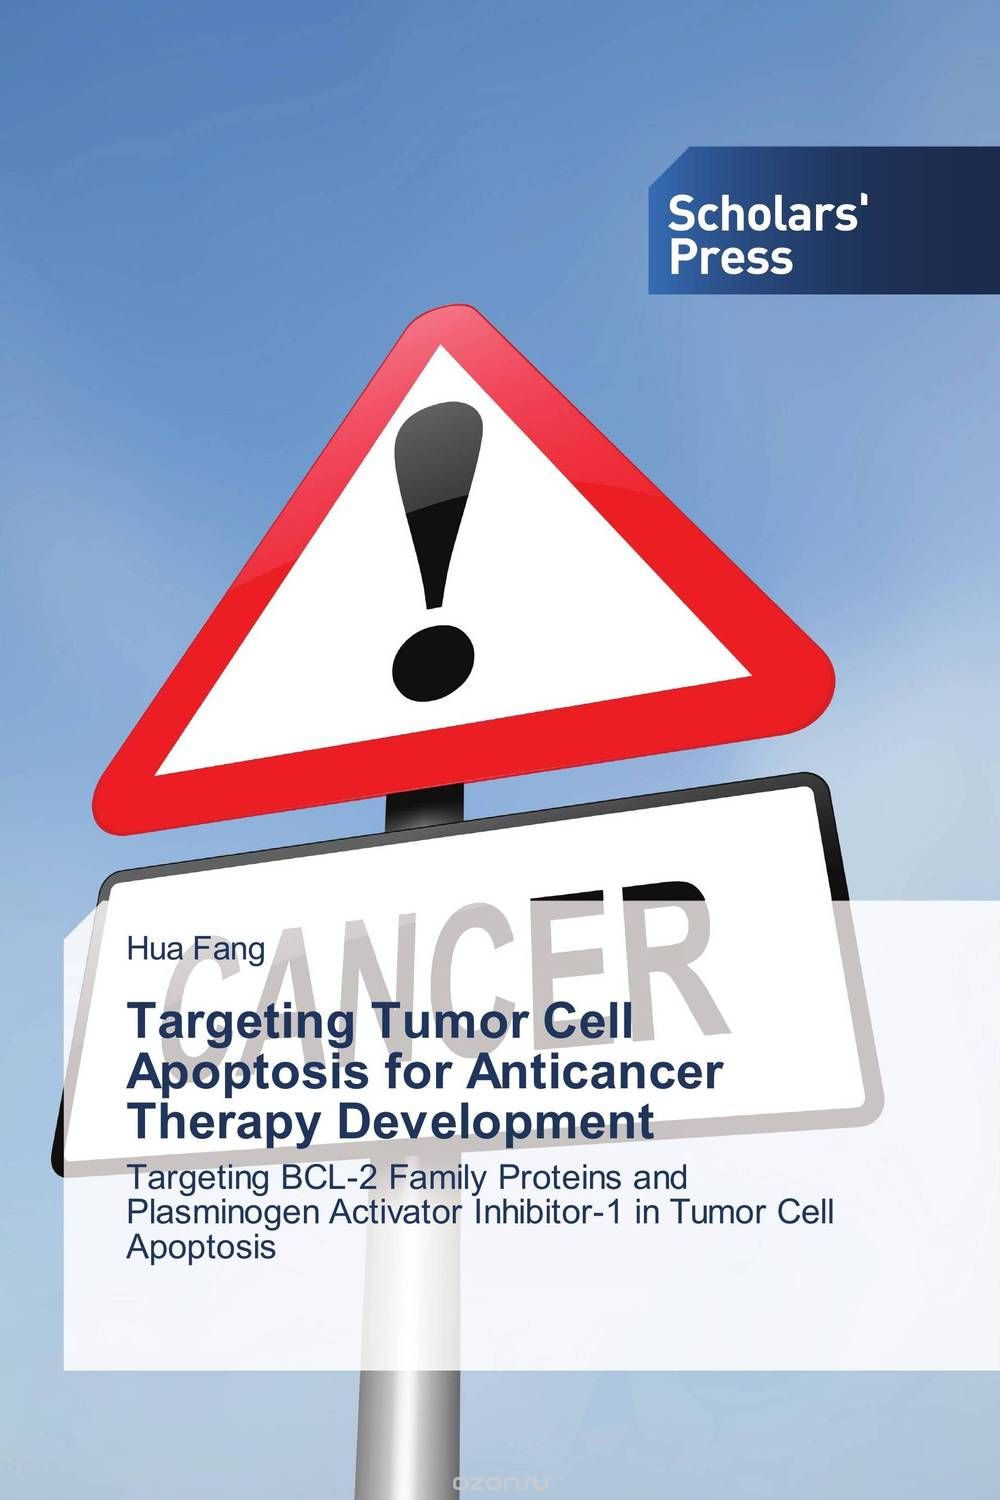 Скачать книгу "Targeting Tumor Cell Apoptosis for Anticancer Therapy Development"